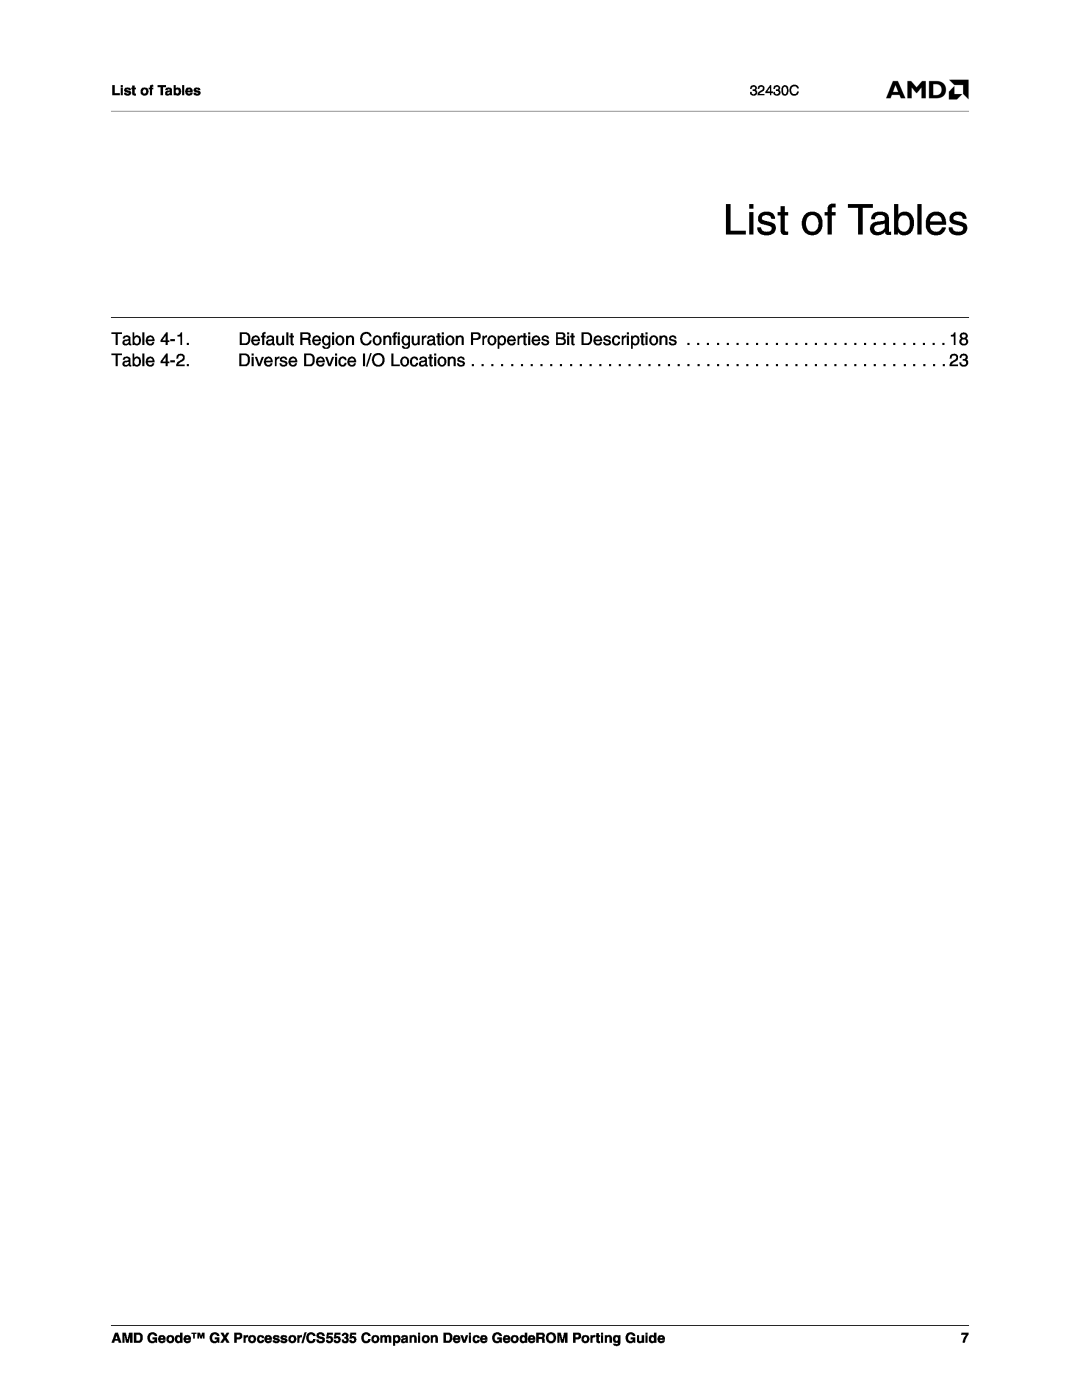 AMD CS5535 List of Tables, 1. Default Region Configuration Properties Bit Descriptions, 2. Diverse Device I/O Locations 